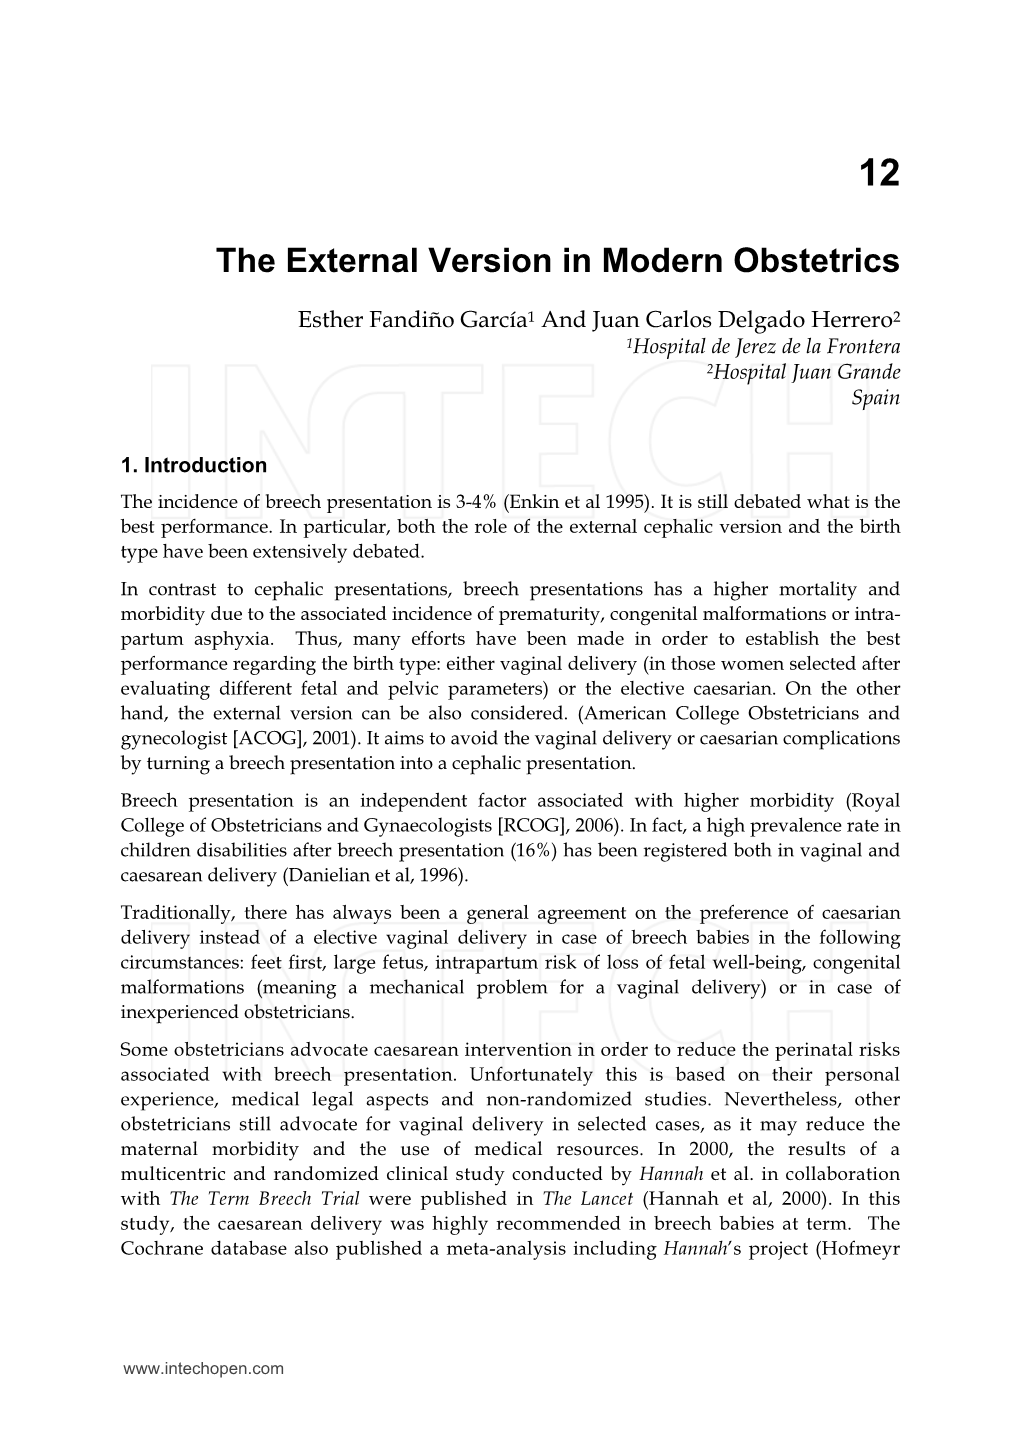 The External Version in Modern Obstetrics